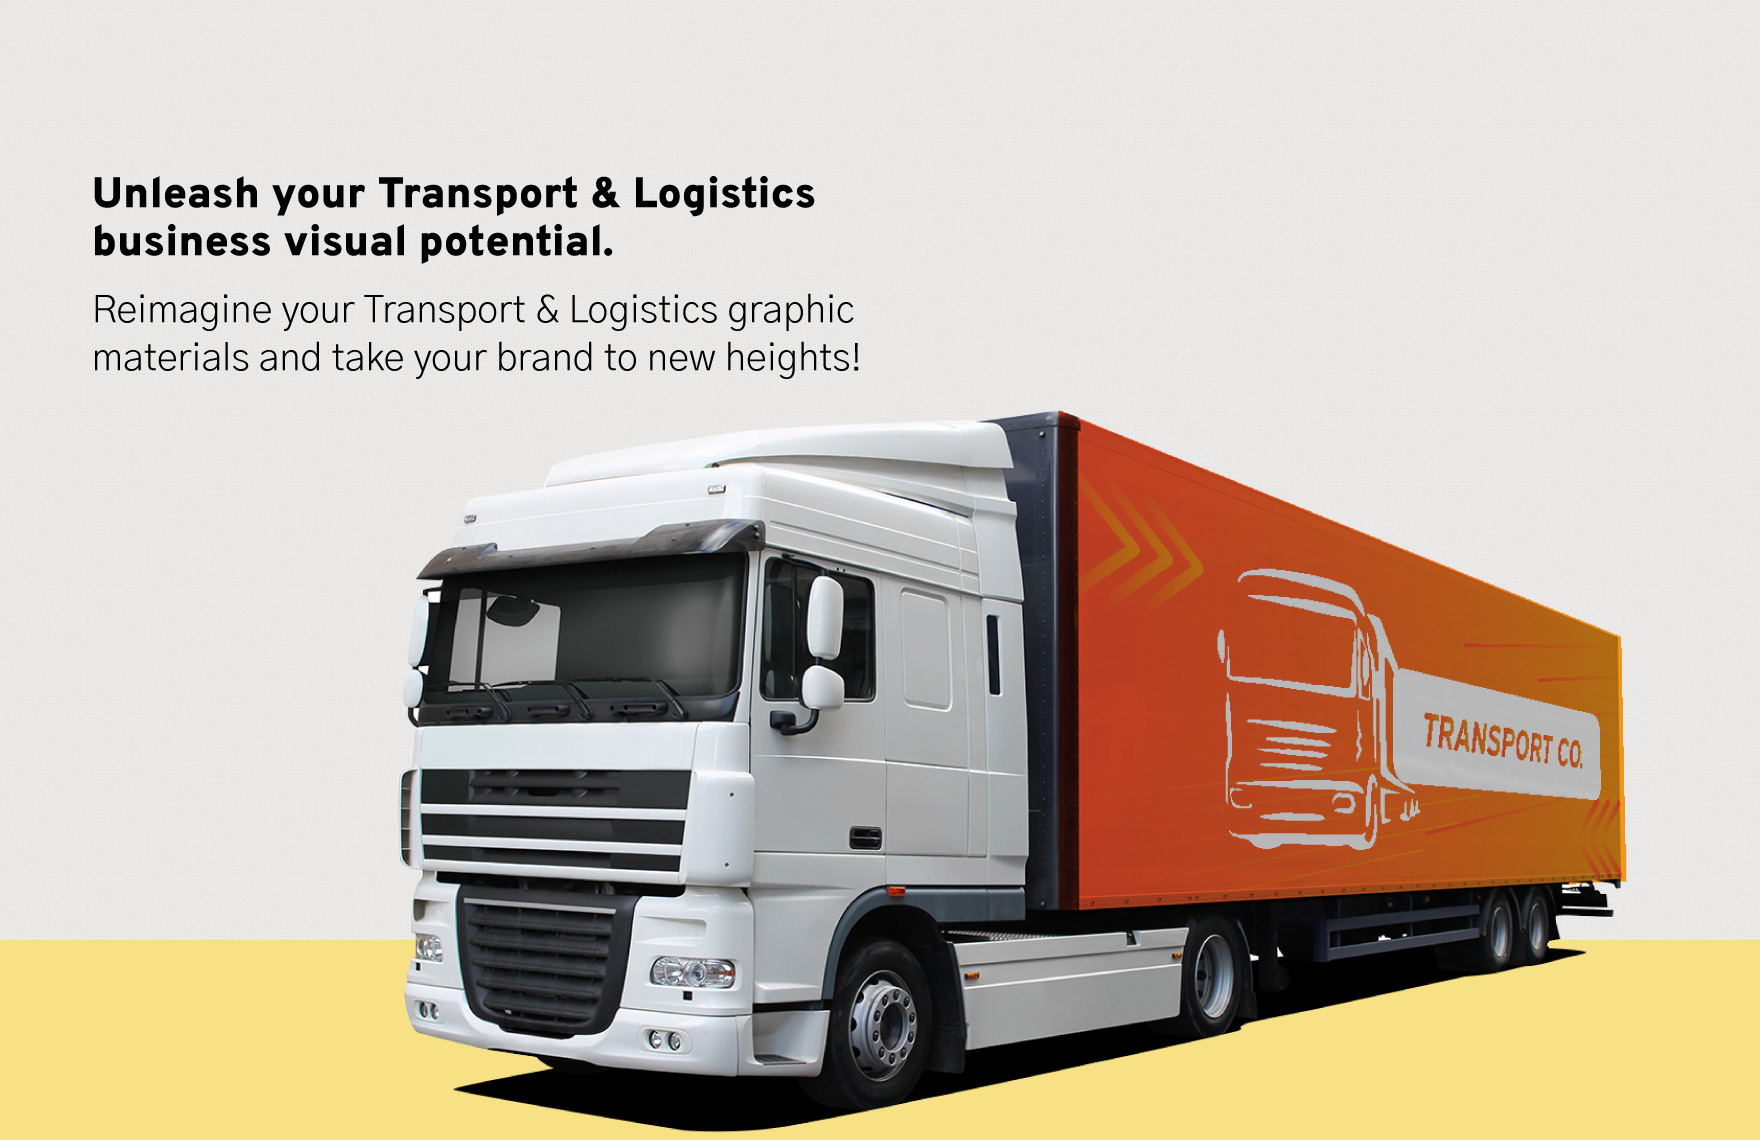 Transport and Logistics Semi-Truck Trailer Wrap Design for Long Hauls Template